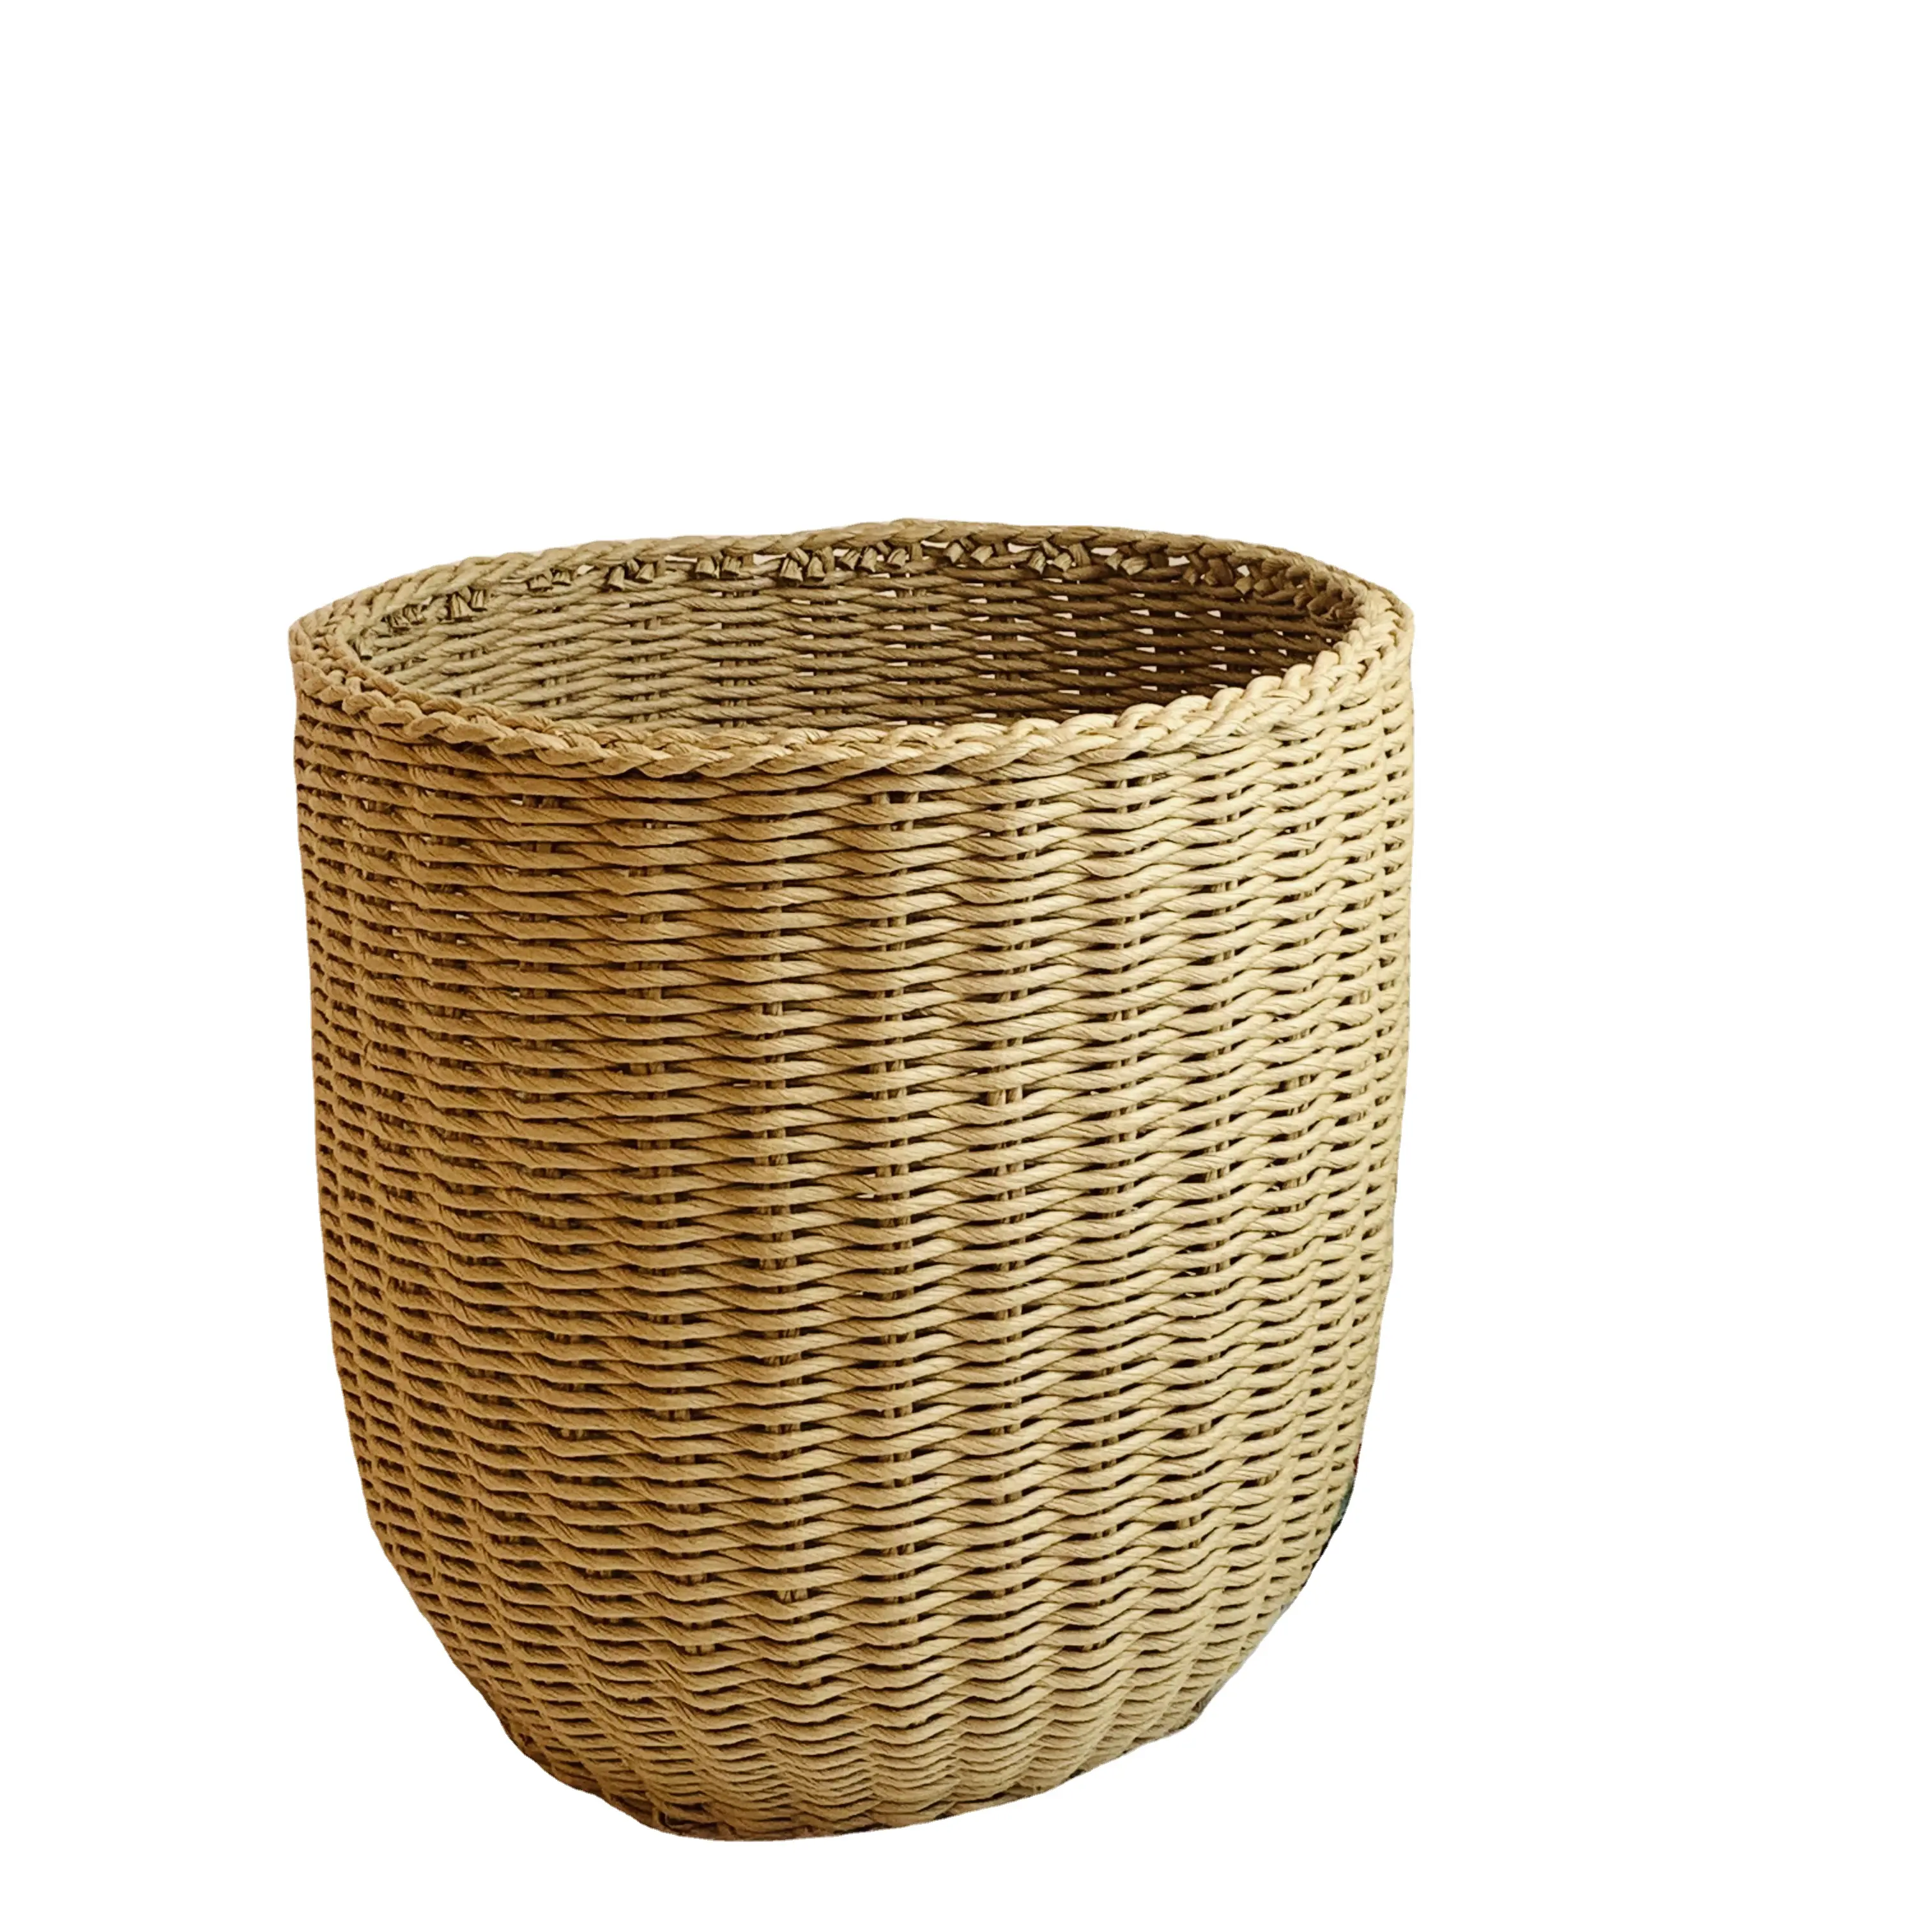 Storage basket weaving basket sorting straw cosmetics storage table wicker woven basket round storage box